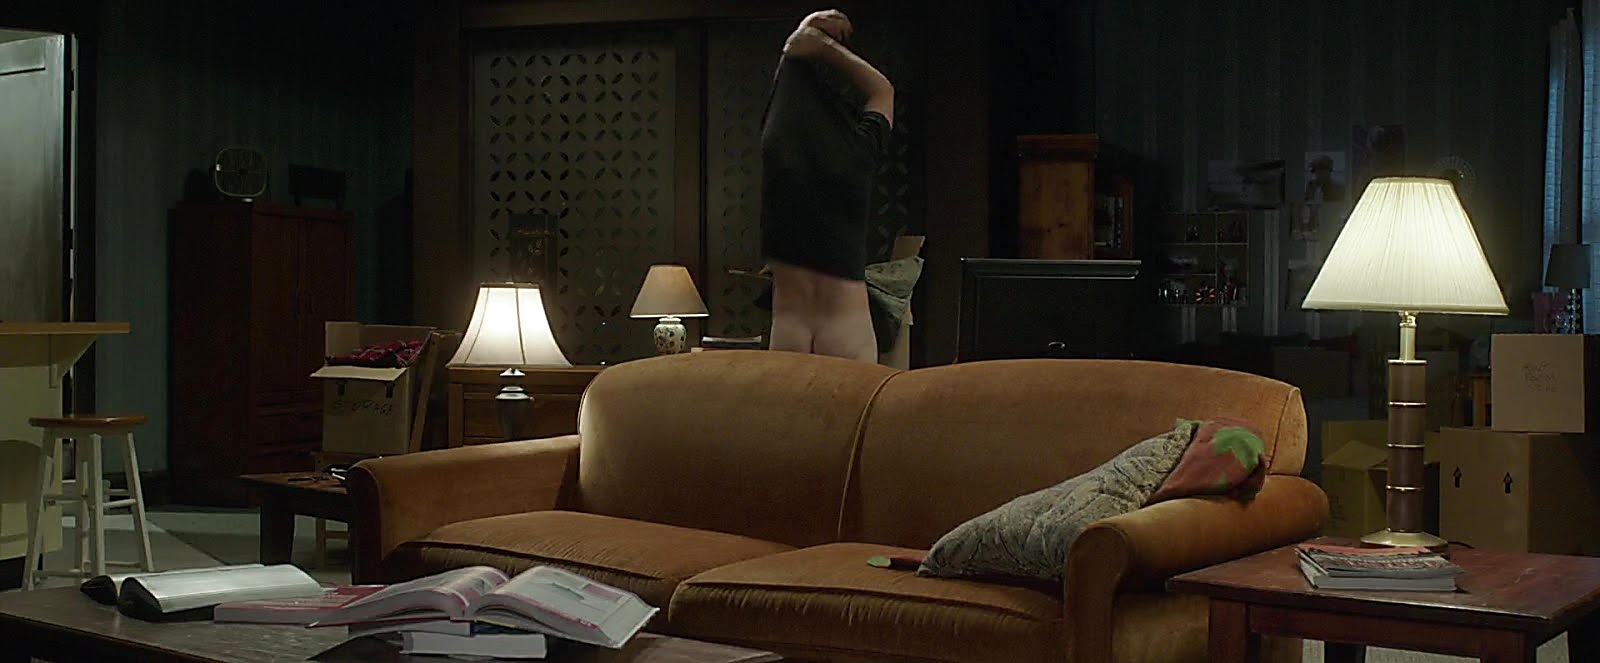 Greg Kinnear sexy shirtless scene August 17, 2019, 1pm